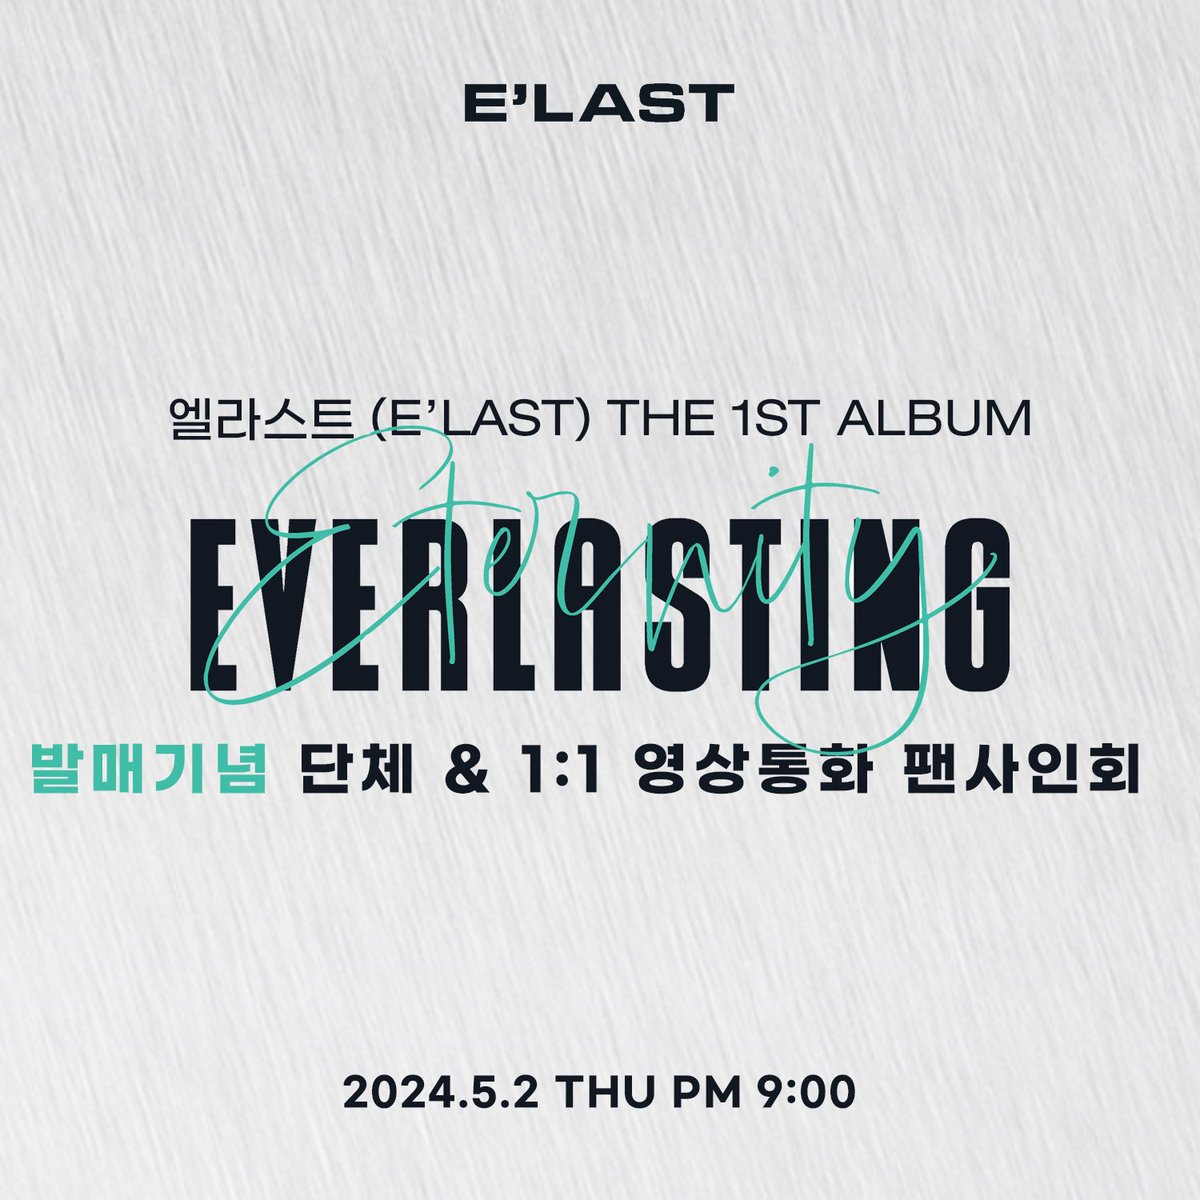 E’LAST The 1st Album ‘EVERLASTING’ 발매기념 단체&1:1 영상통화 팬사인회 🗓2024.5.2 THU (KST) -단체 영상통화 팬사인회 : PM 9:00 -유닛 영상통화 팬사인회 : PM 9:40